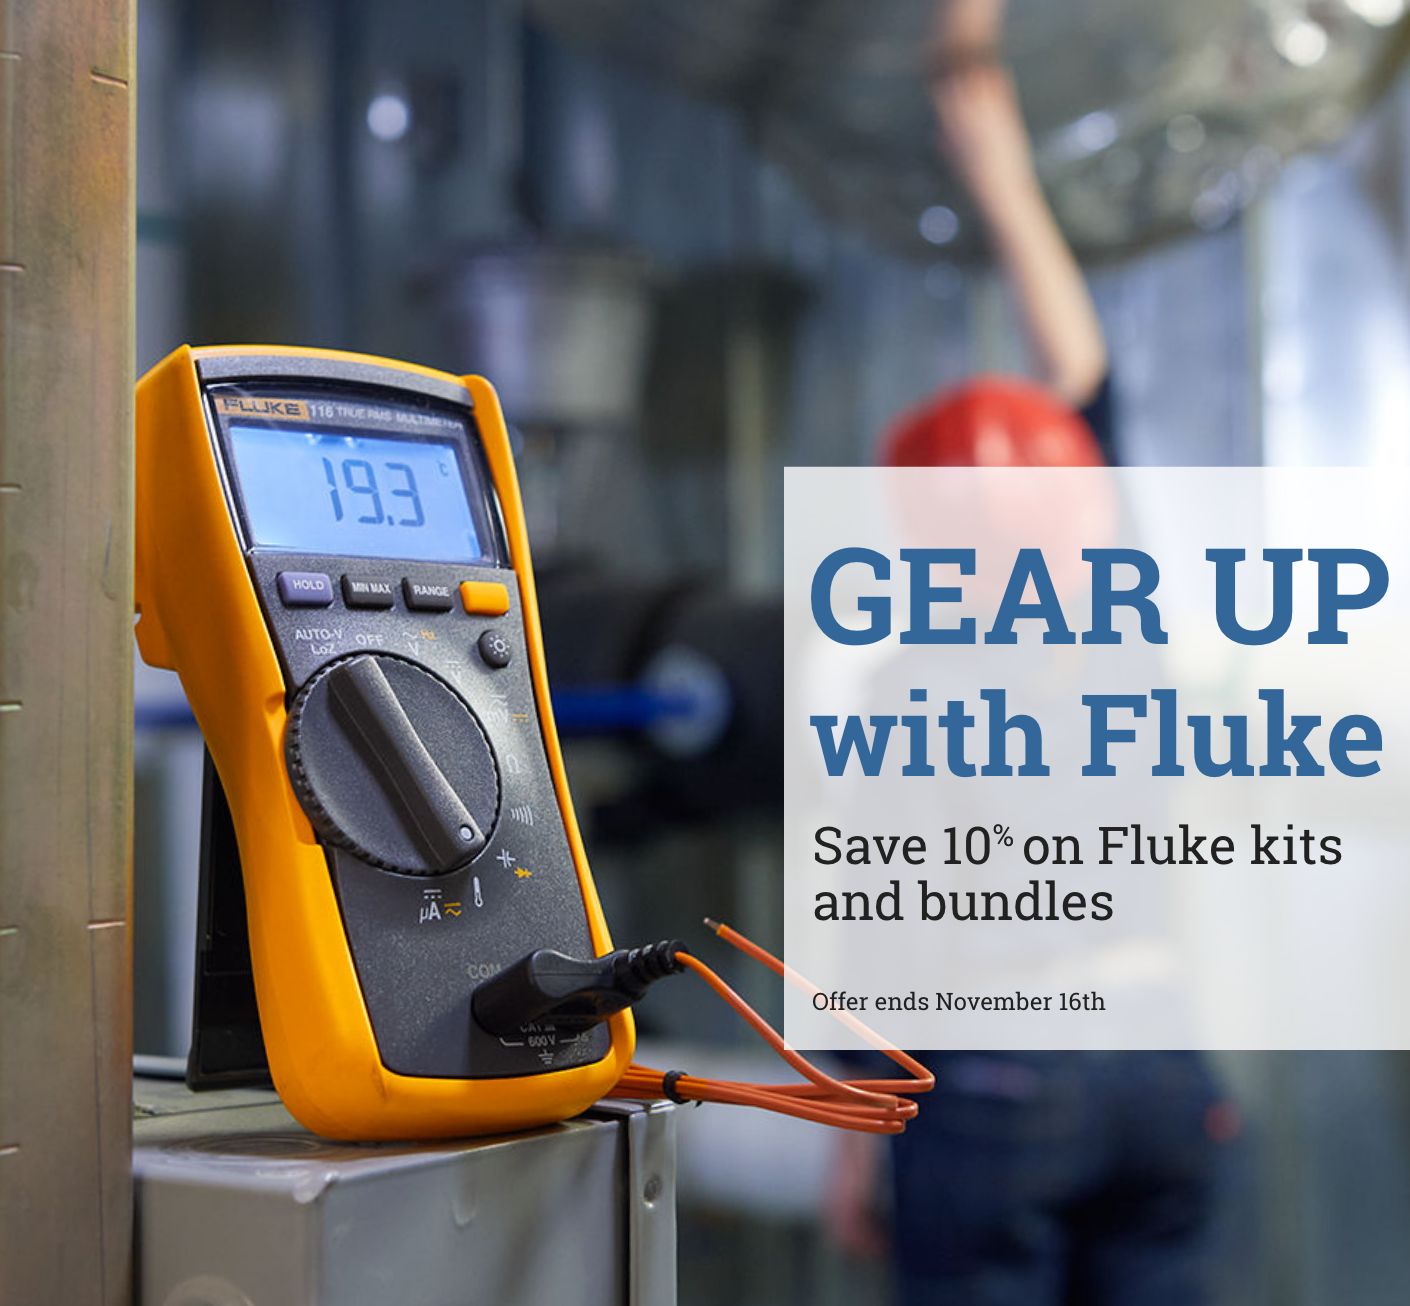 Gear Up with Fluke - Save 10% on Fluke kits and bundles